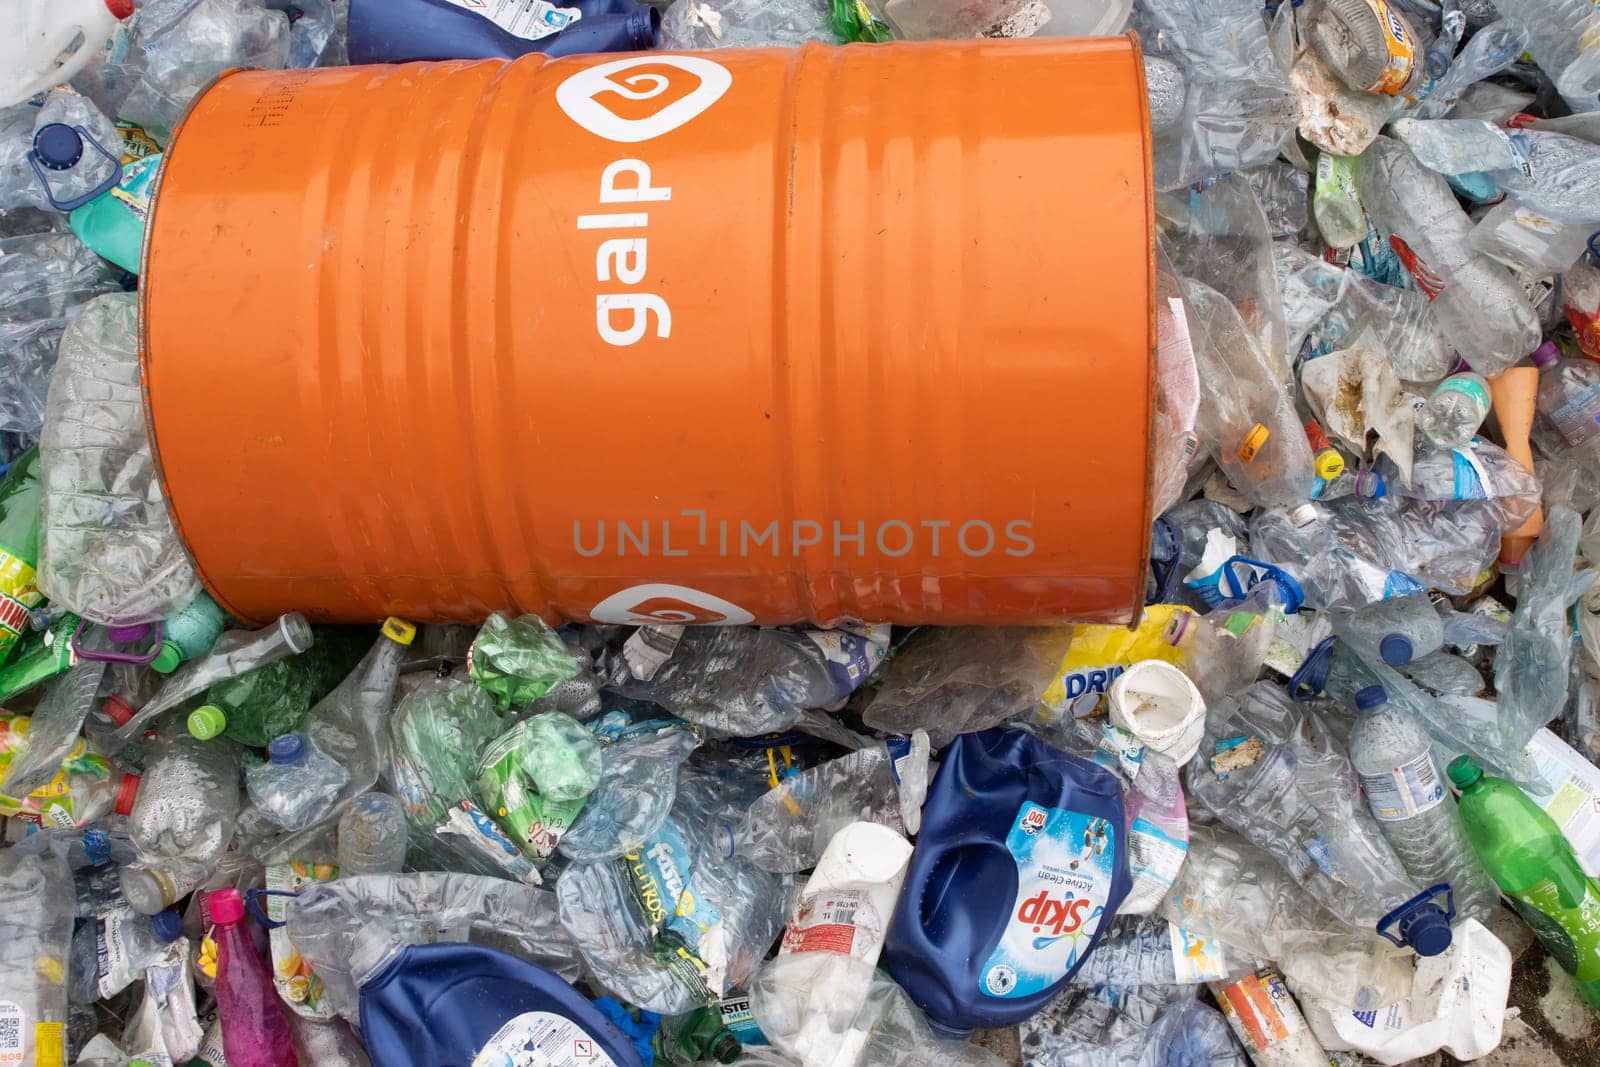 16 october 2022 Almada, Portugal: GALP orange barrel on the landfill full of plastic garbage. Mid shot